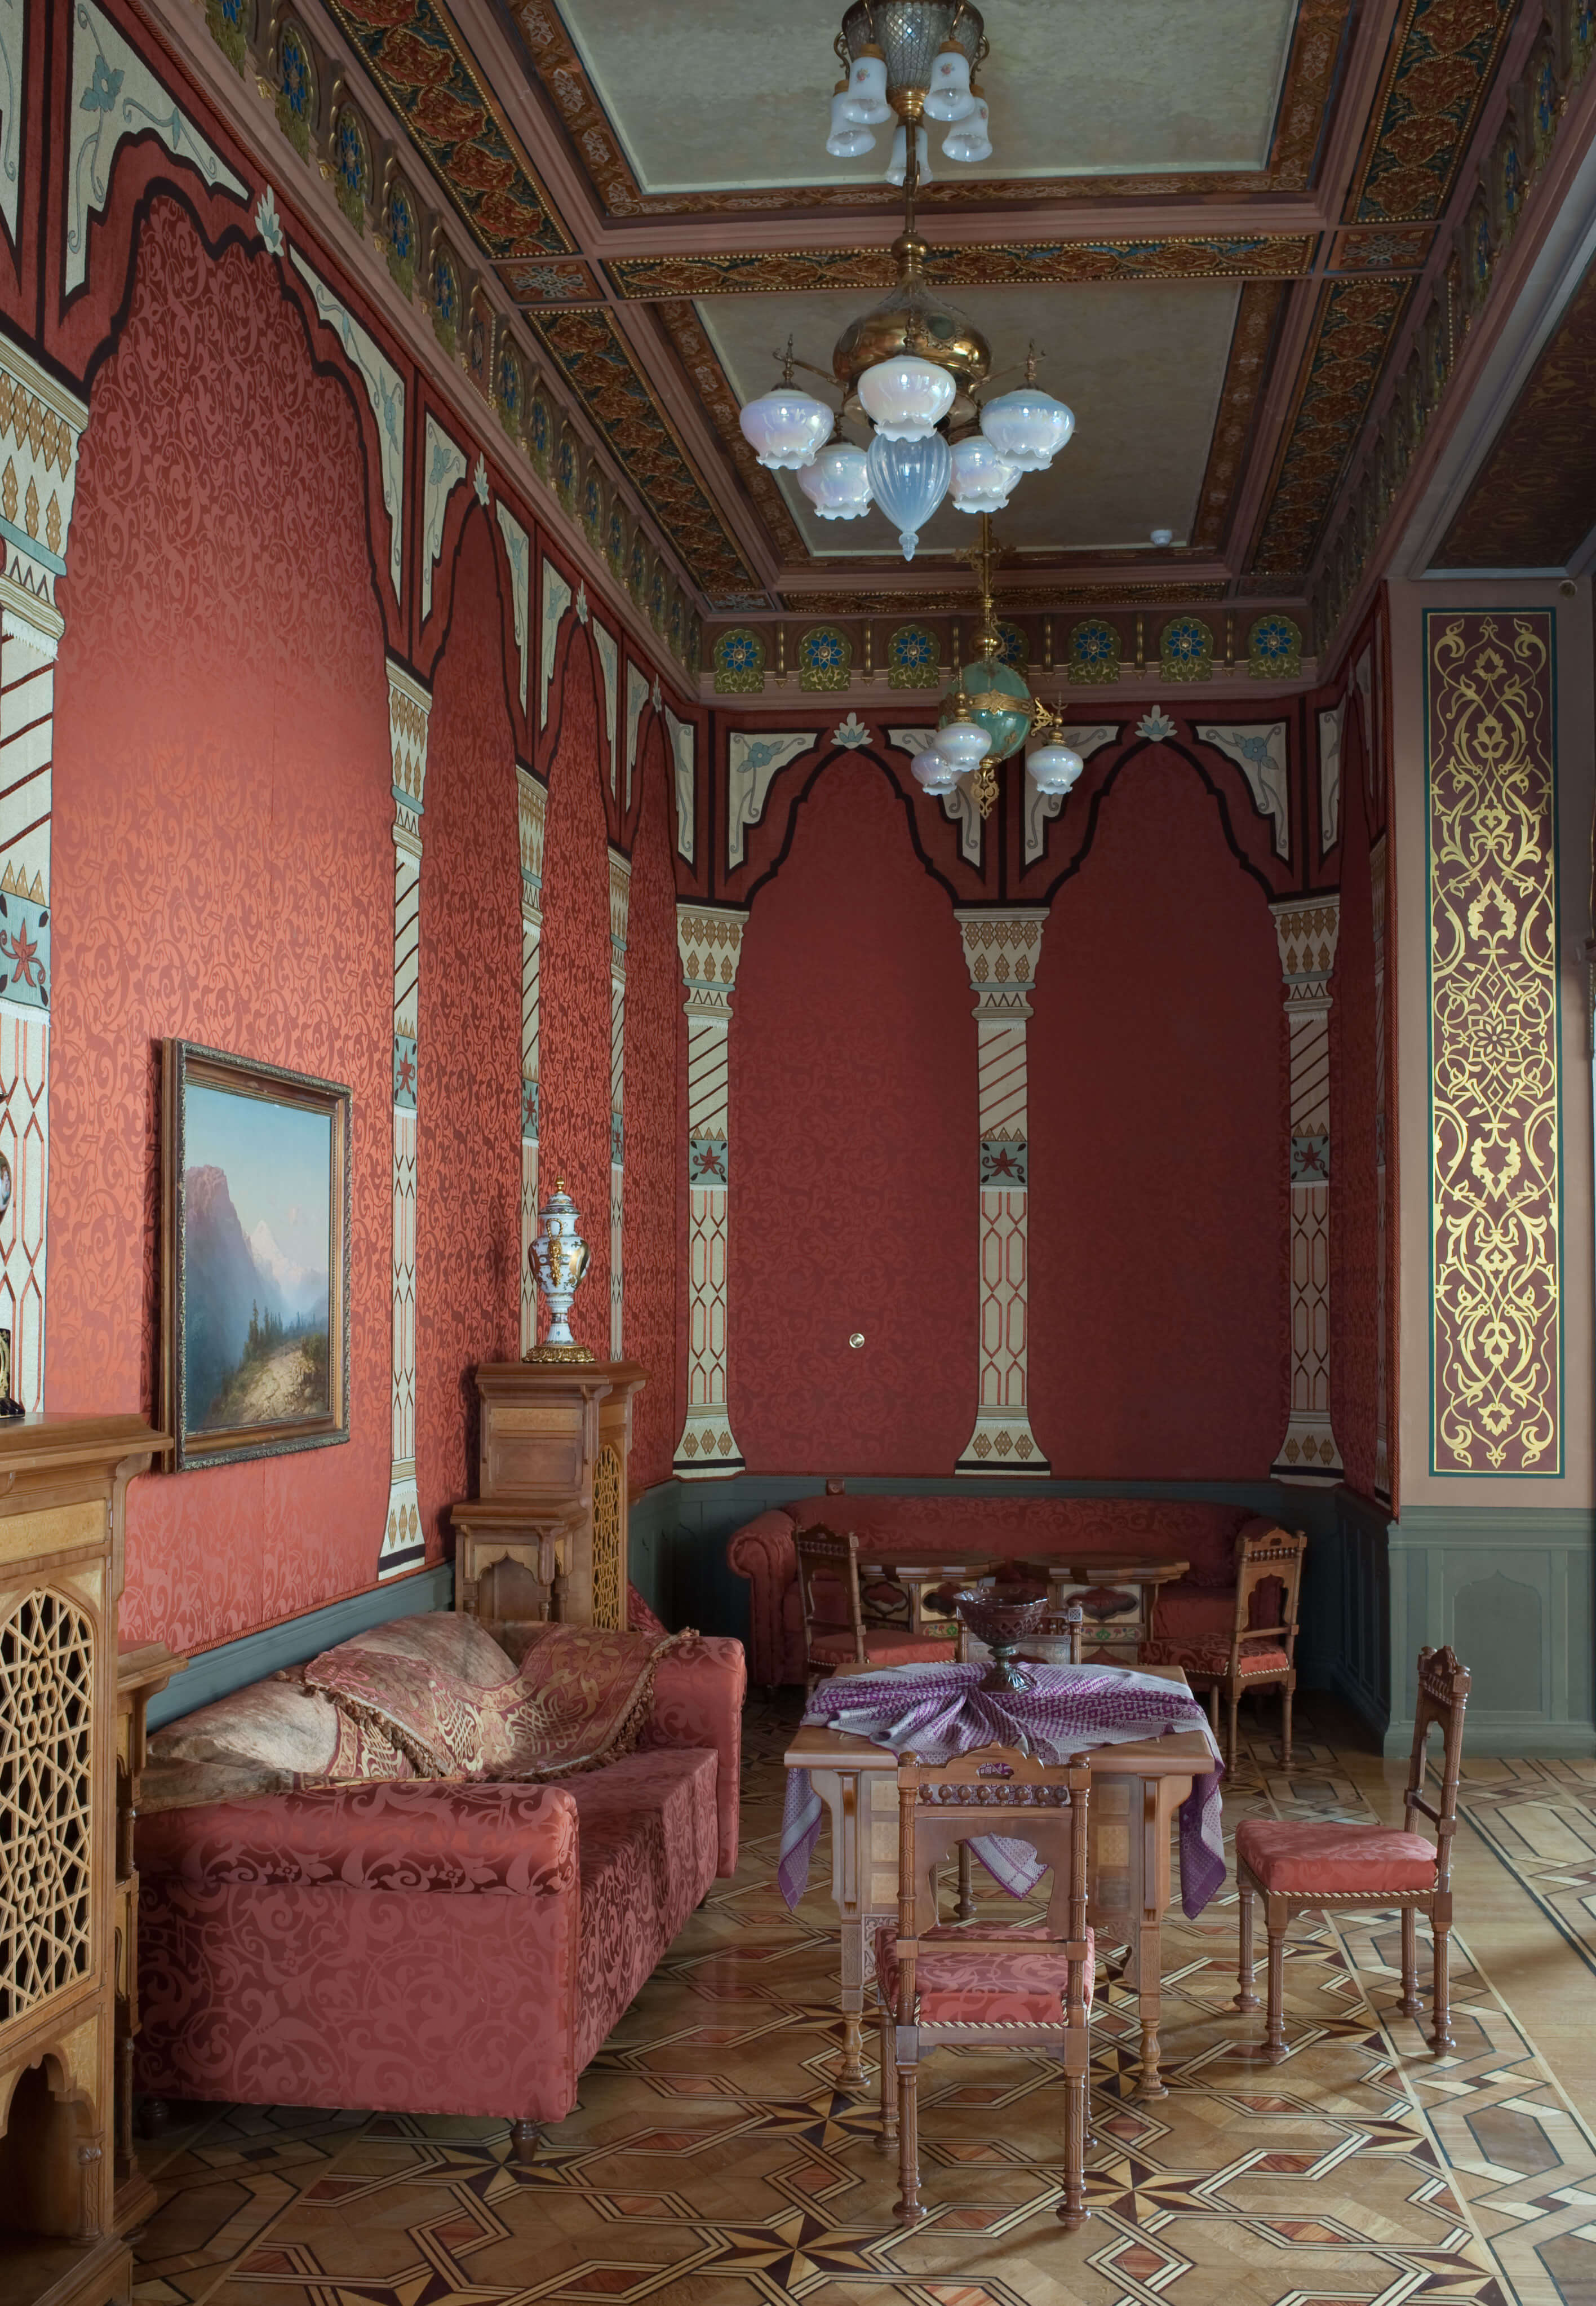 Inside Taghiyev house 